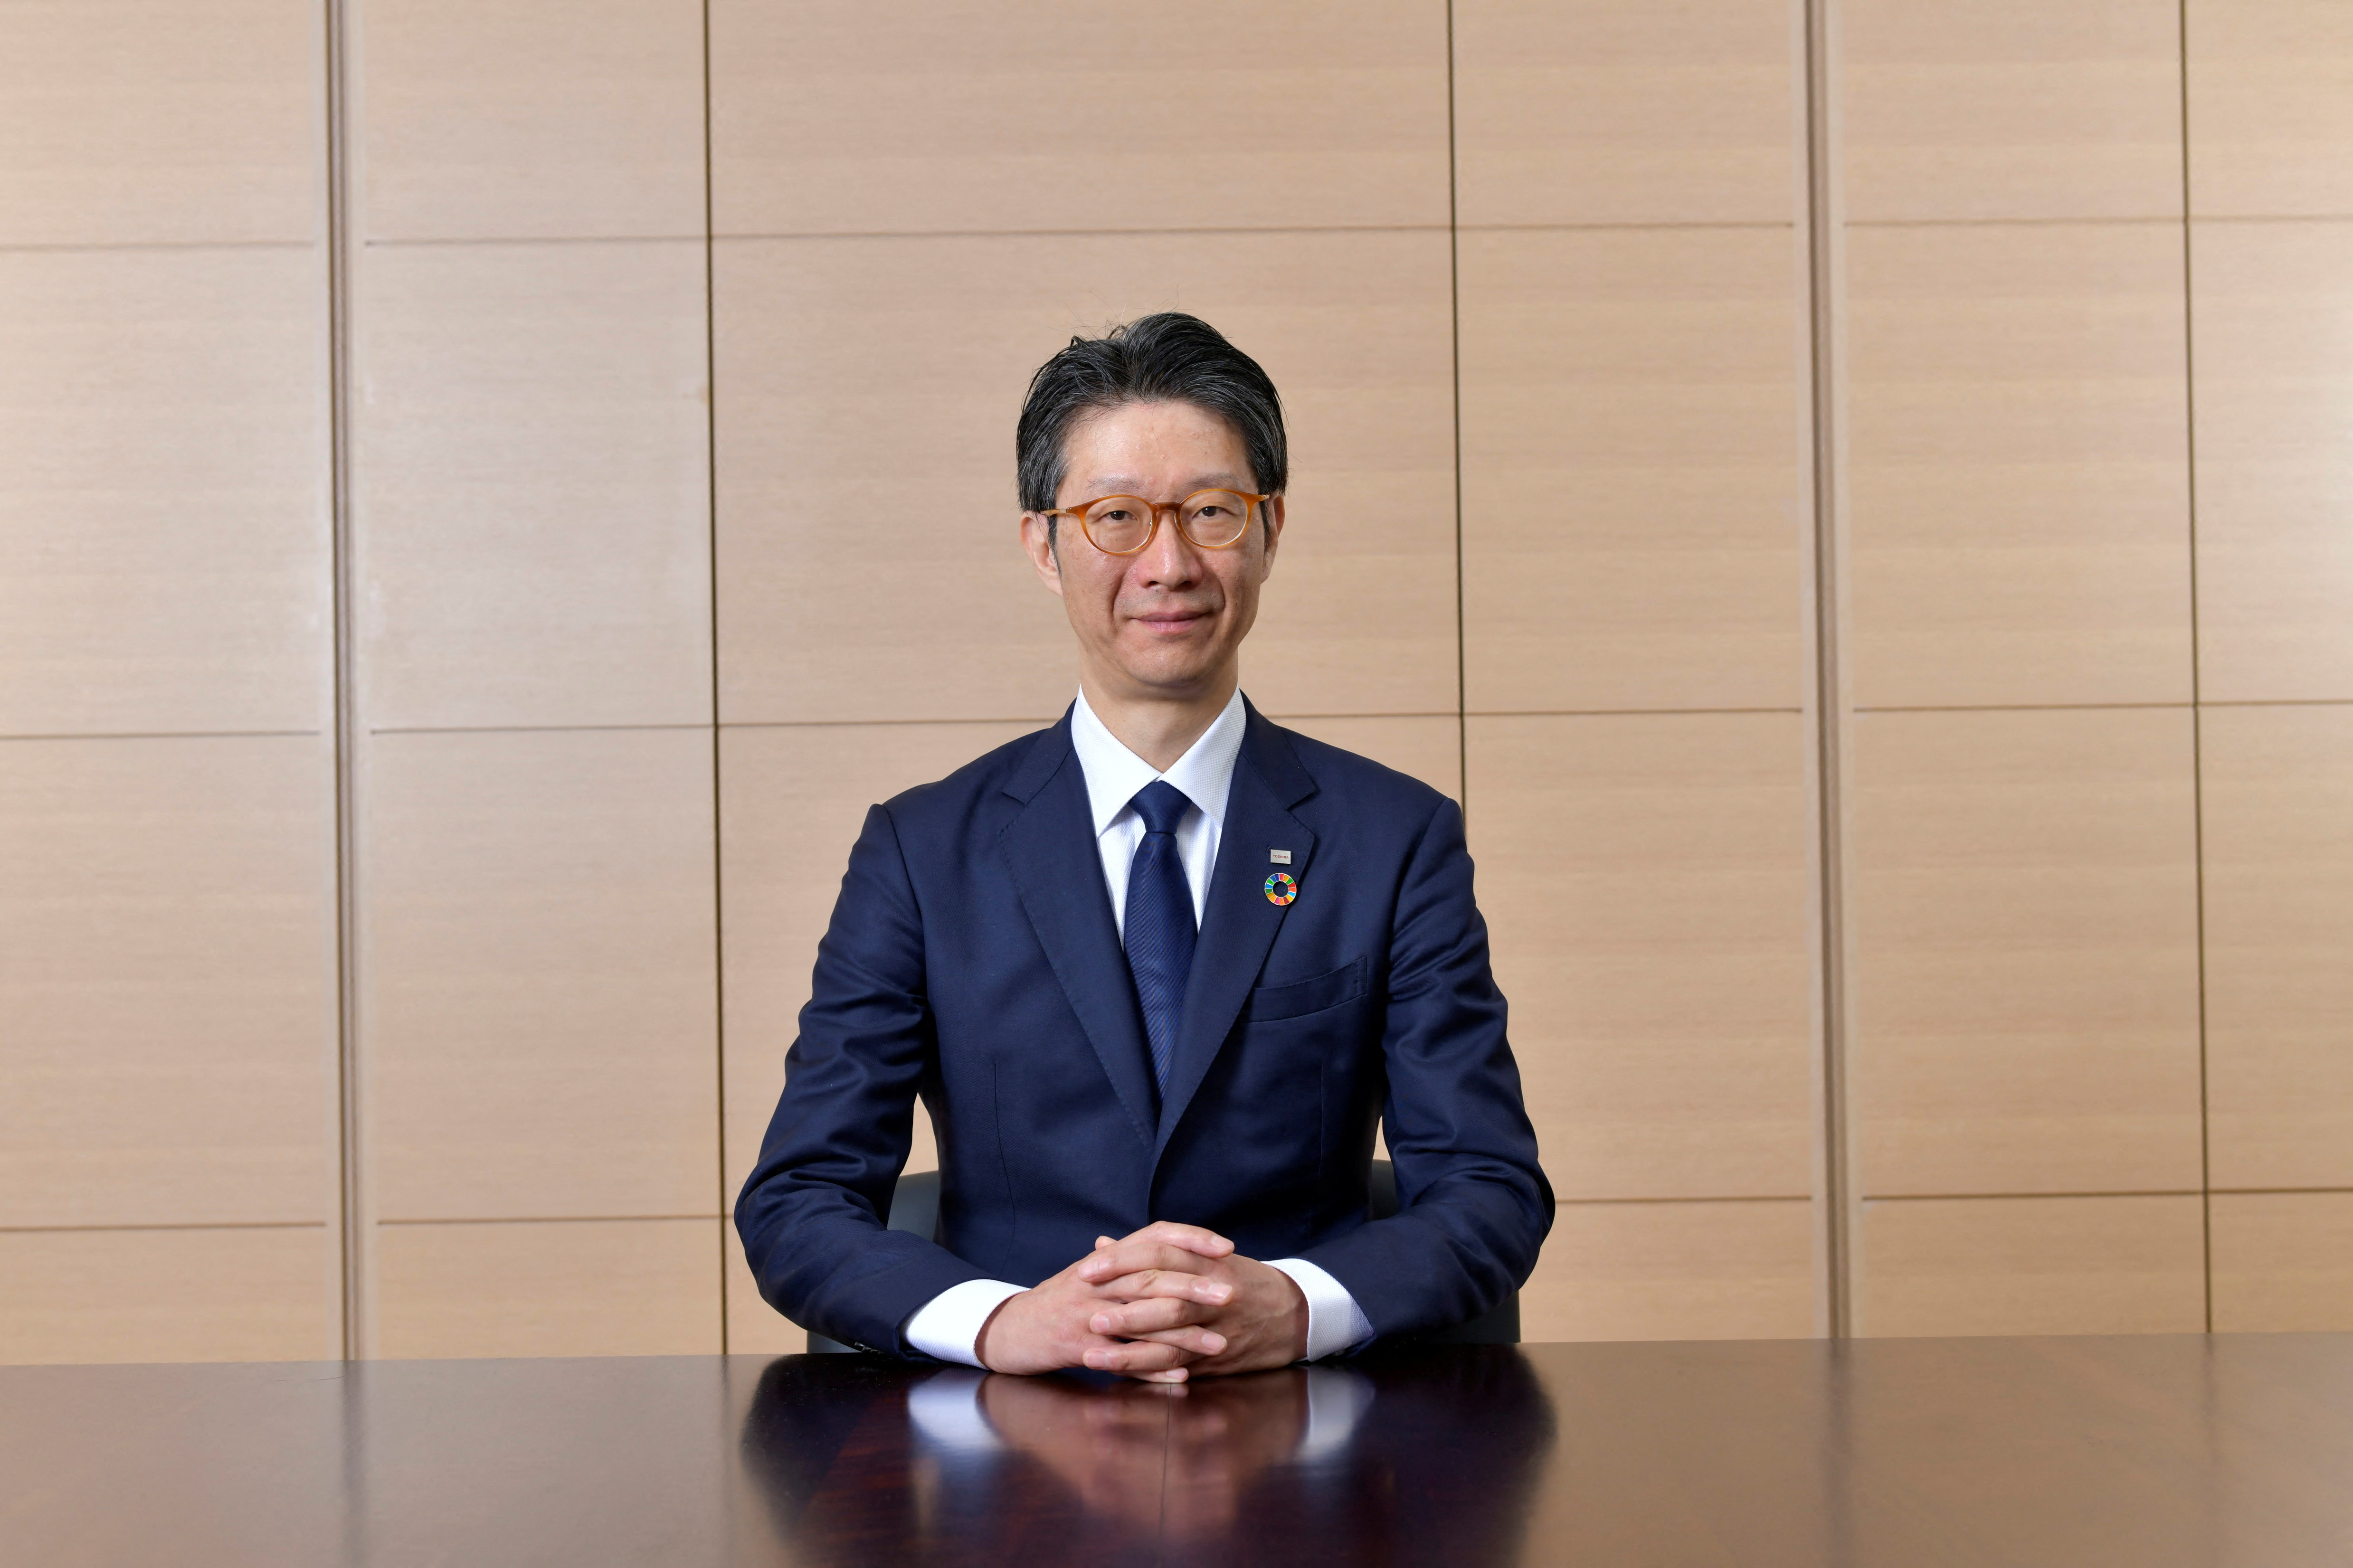 Former aircraft designer and current Toshiba's CEO Shimada poses for a photograph in Kawasaki